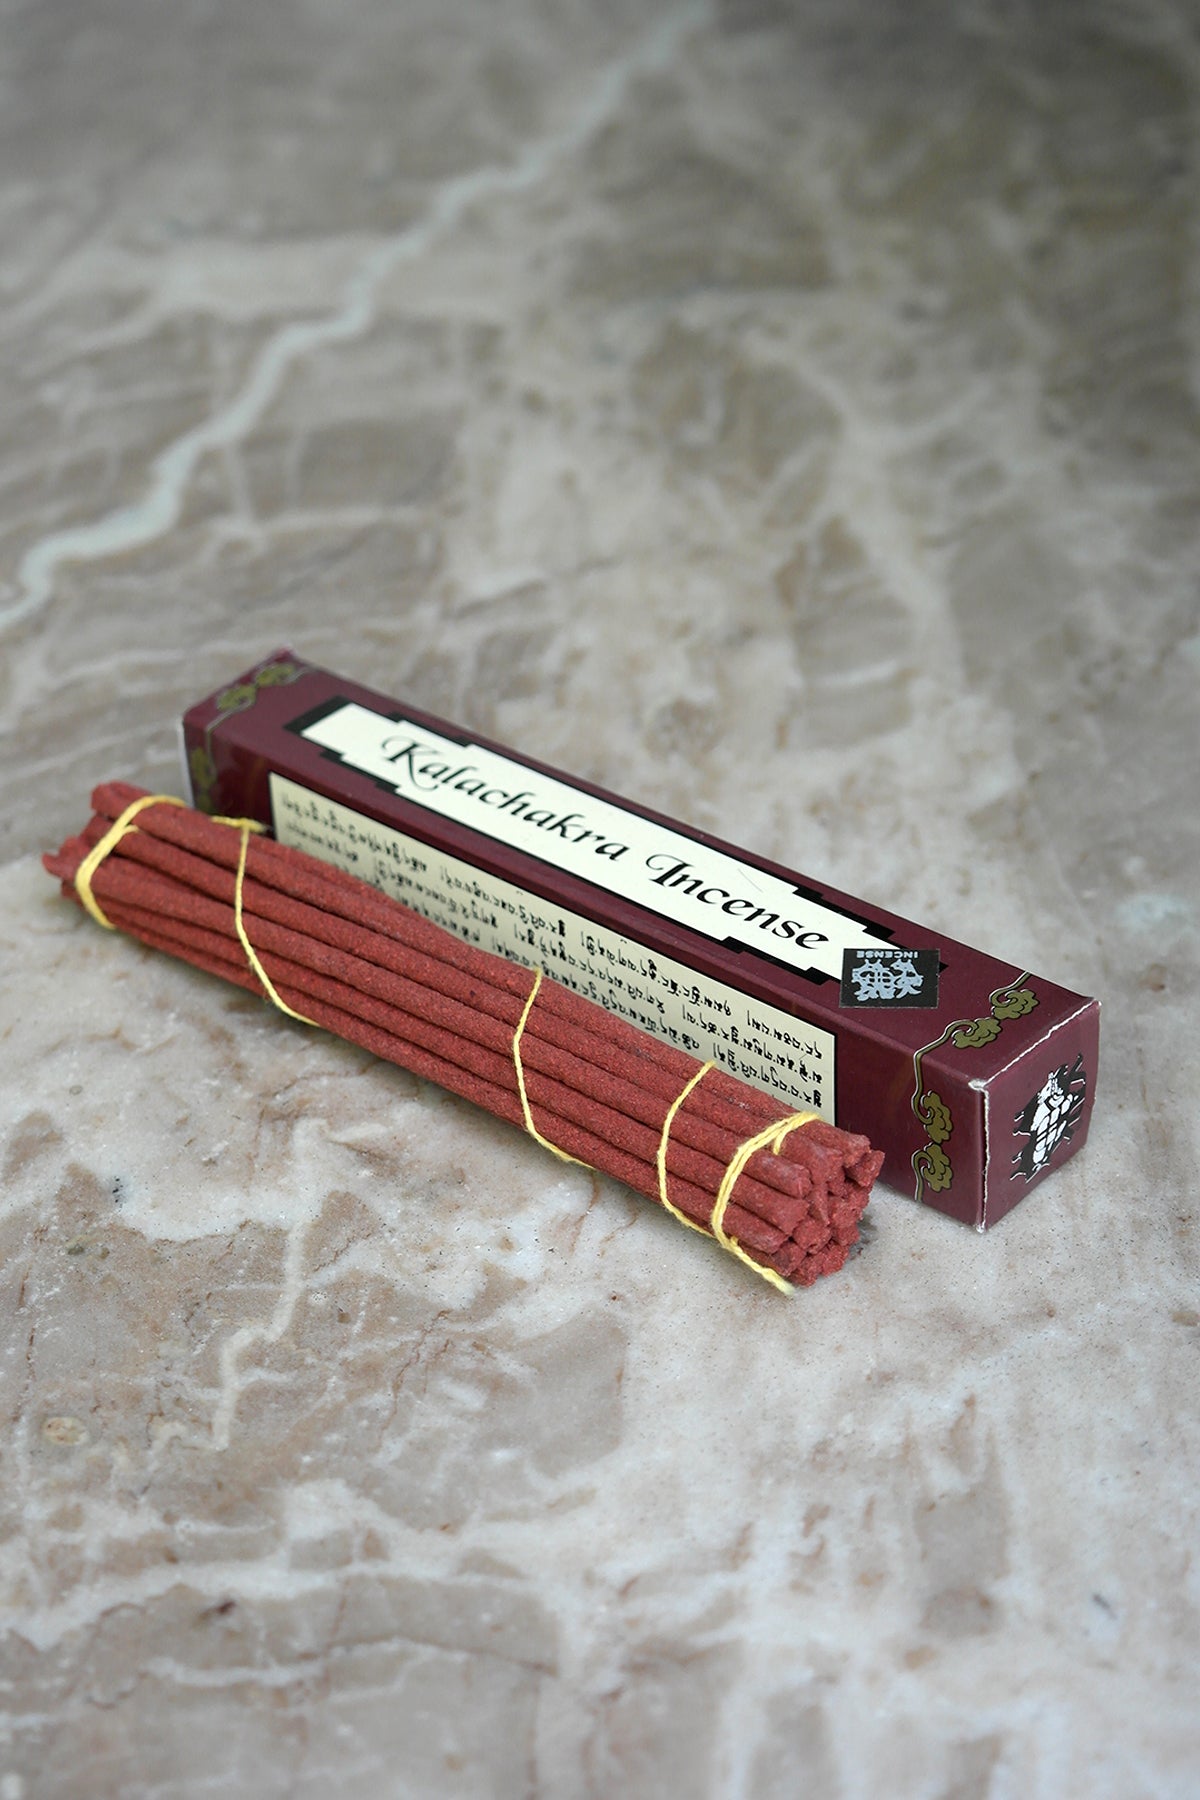 Kalachakra Tibetan Incense Sticks, set of three packs